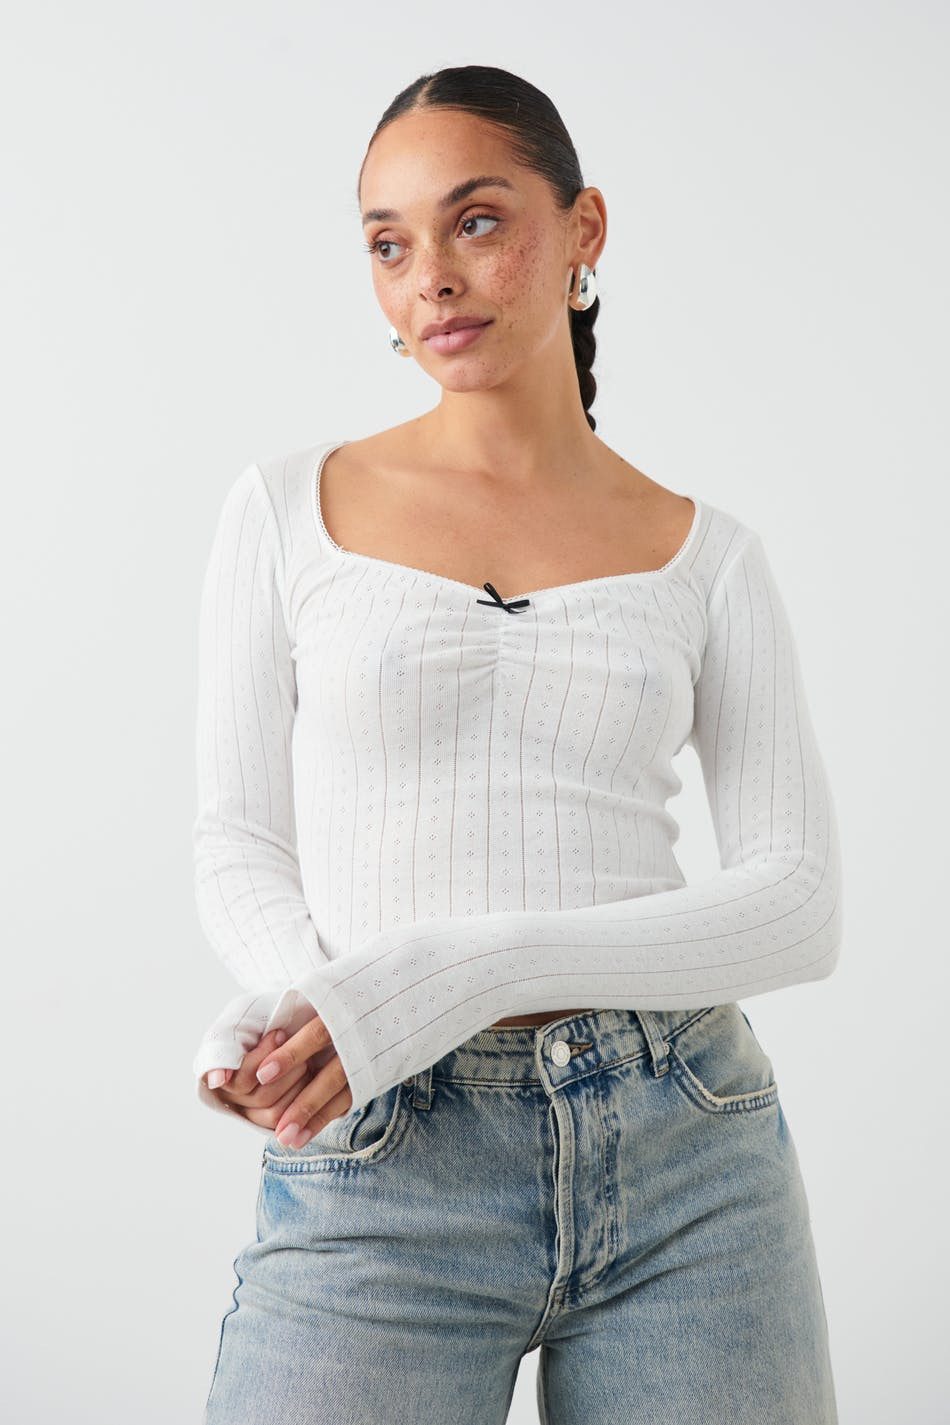 Gina Tricot Langarmshirt - Shirt langarm - Oberteil mit Herzausschnitt pointelle bow top